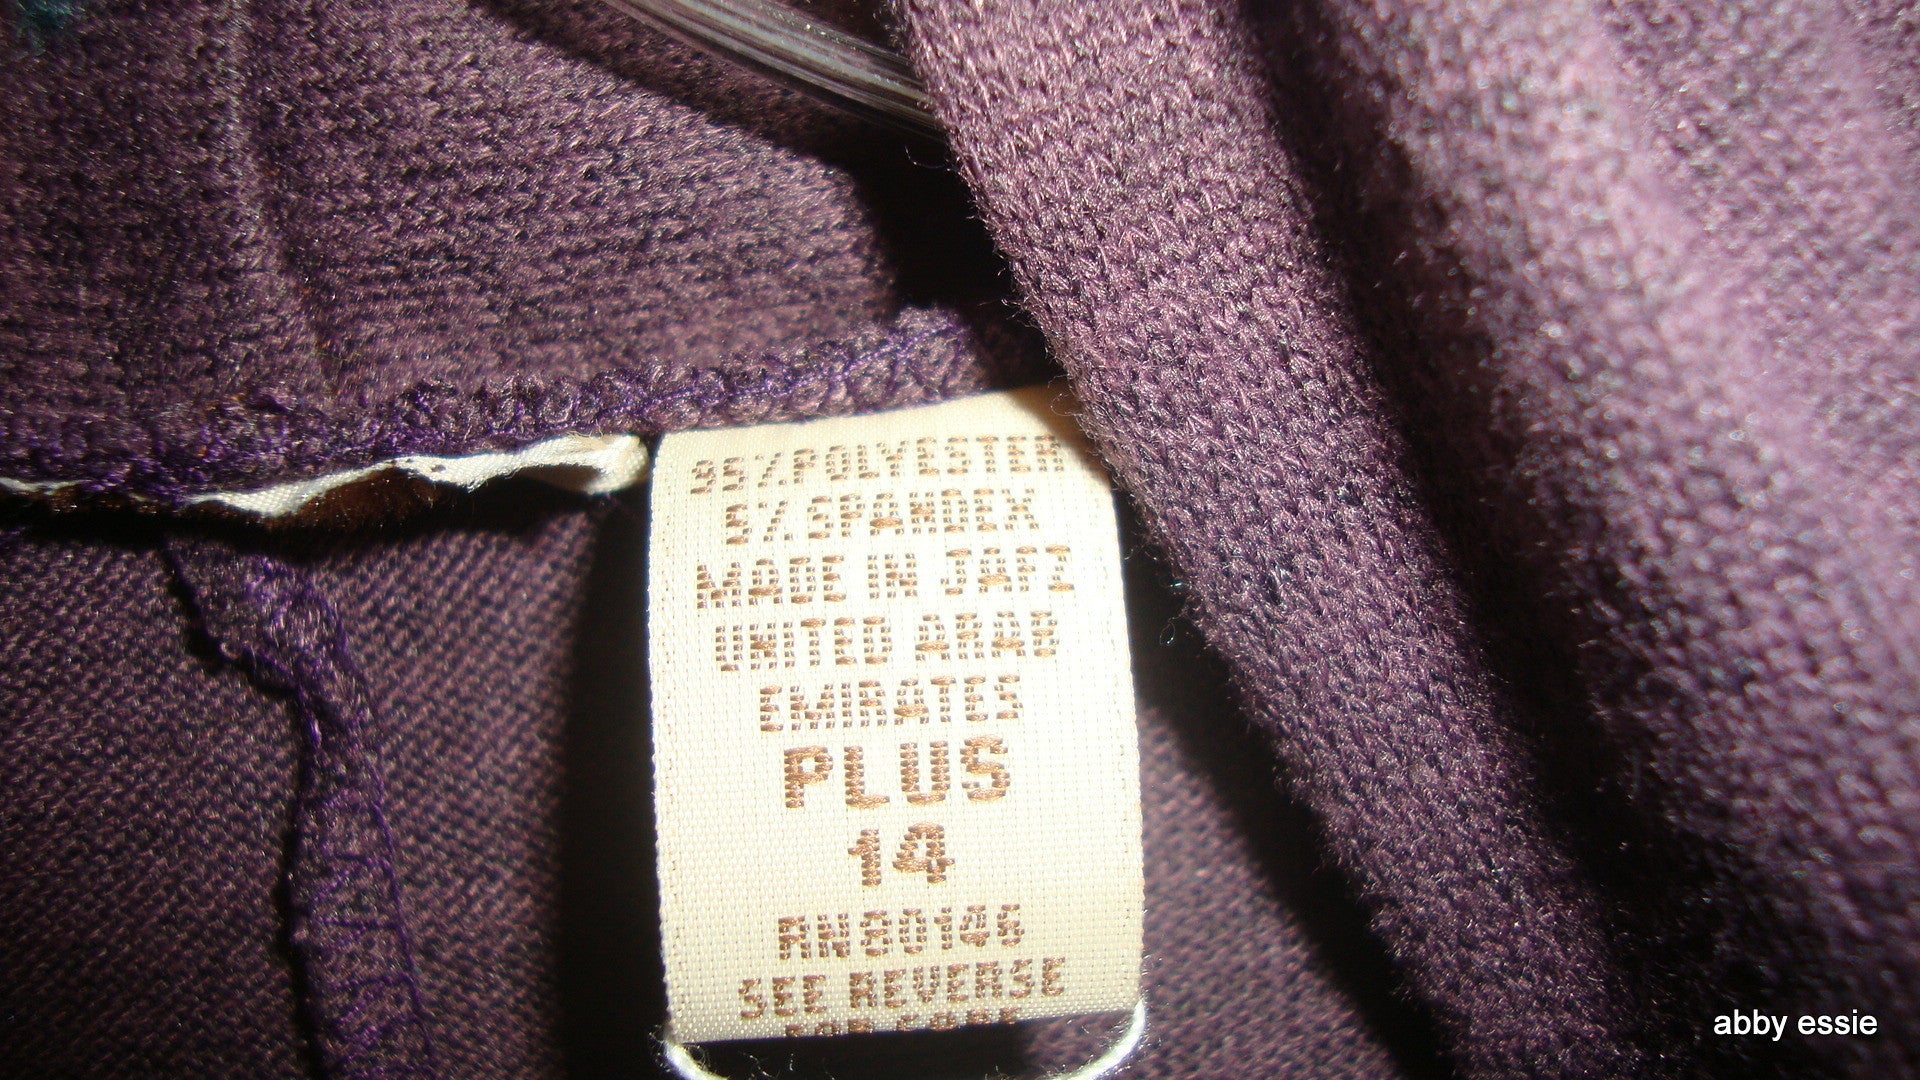 Cozy Purple Eggplant Knit Sweater Long Turtleneck Dress Sz Plus 14 Large Abby Essie